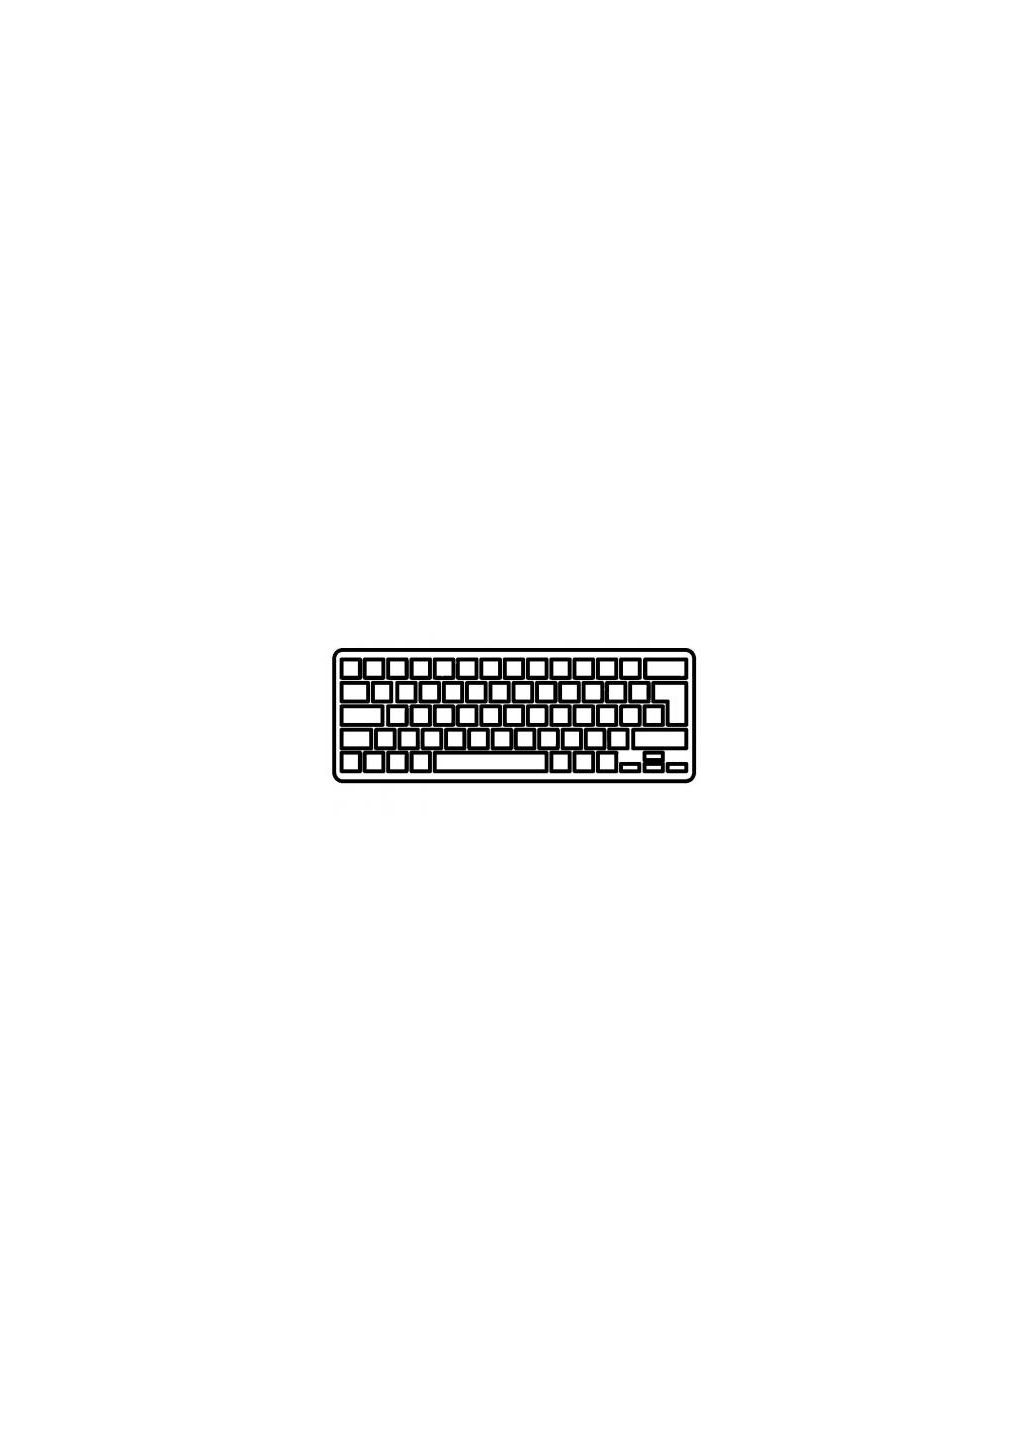 Клавиатура ноутбука (A43663) Samsung nc110 белая без рамки ru (276706816)